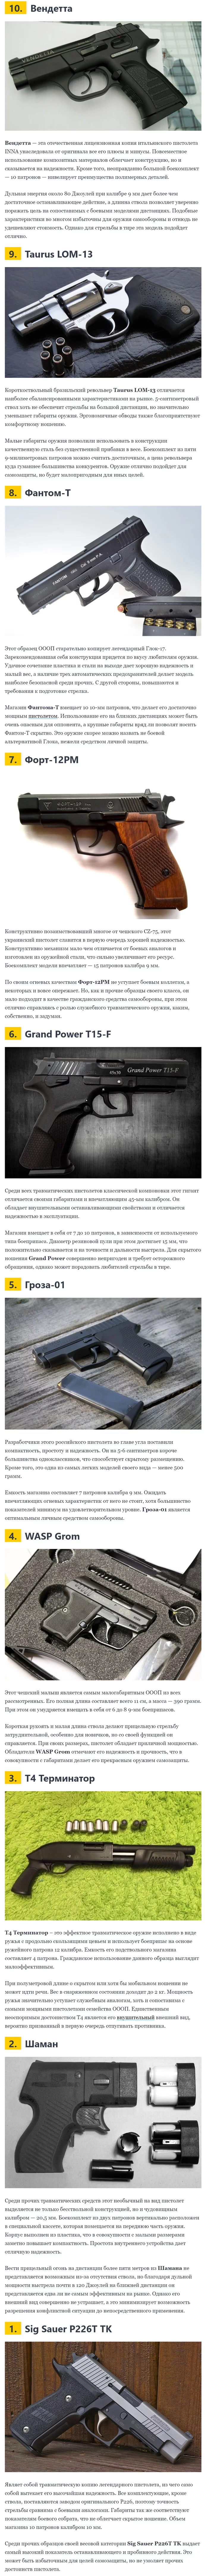 Powerful traumatic pistols - Traumatic weapon, Pistols, Power, Russia, Self defense, Longpost